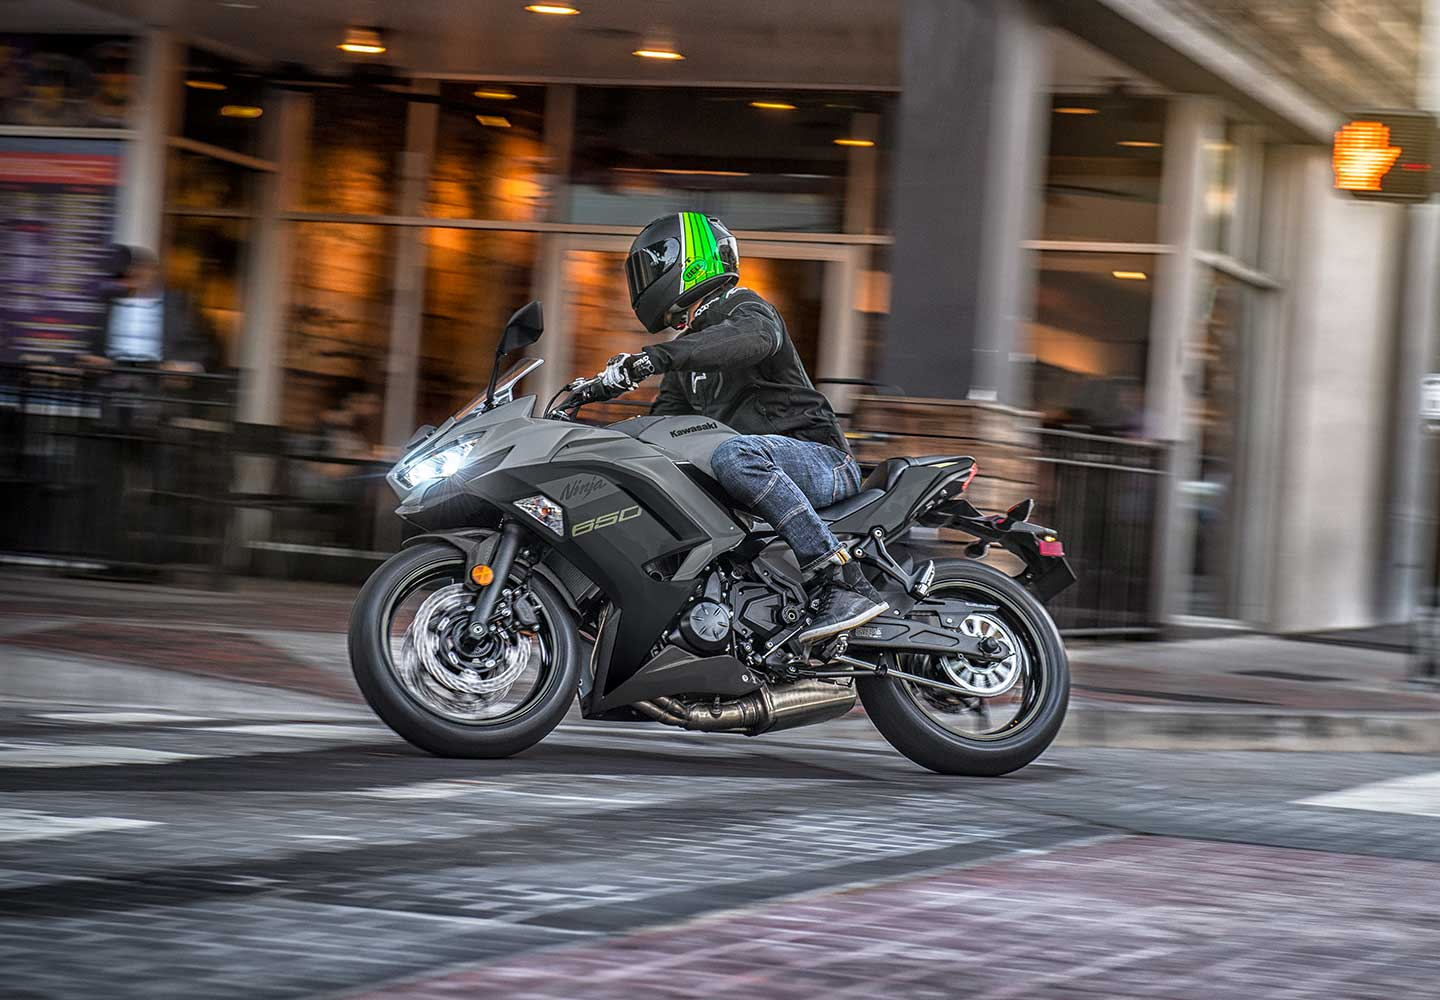 Kawasaki Ninja® 650 | Motorcycle | Sporty & Nimble